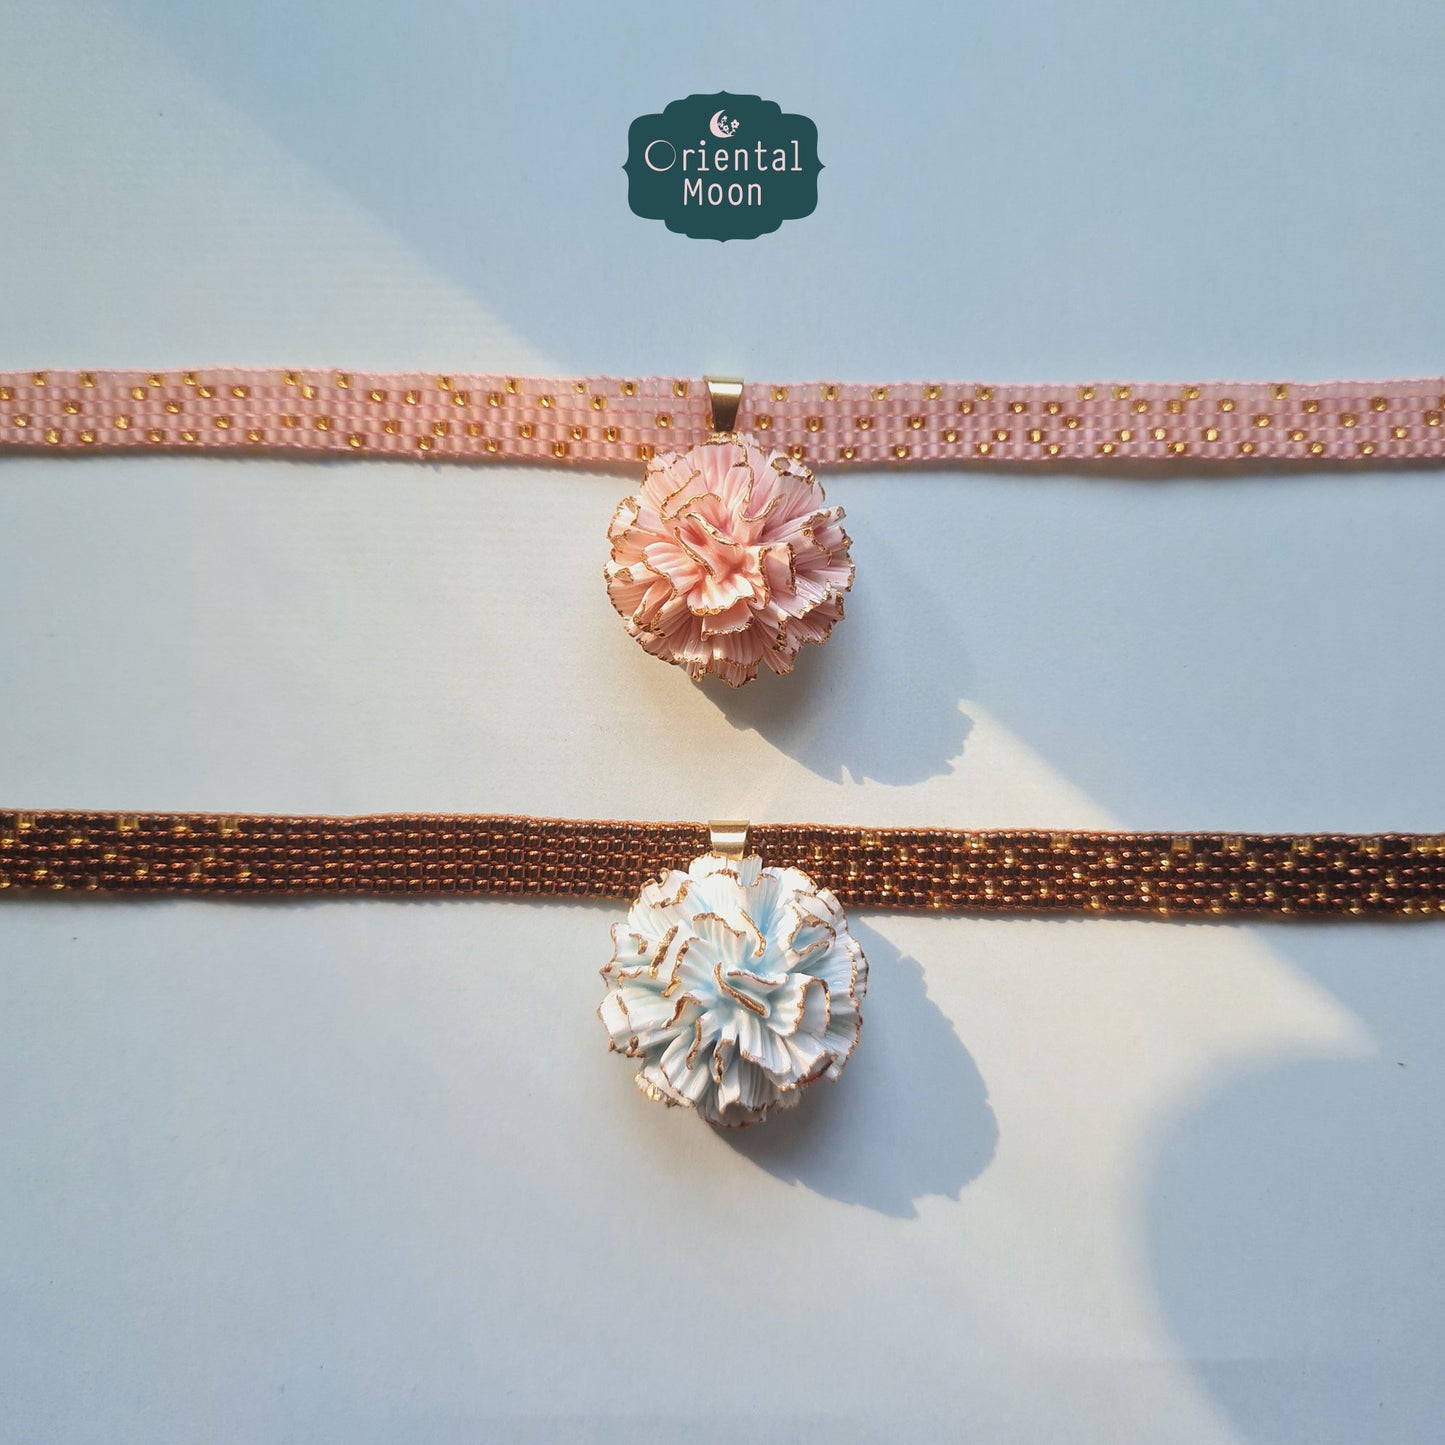 Dok Carnation Porcelain pendant with beads chocker